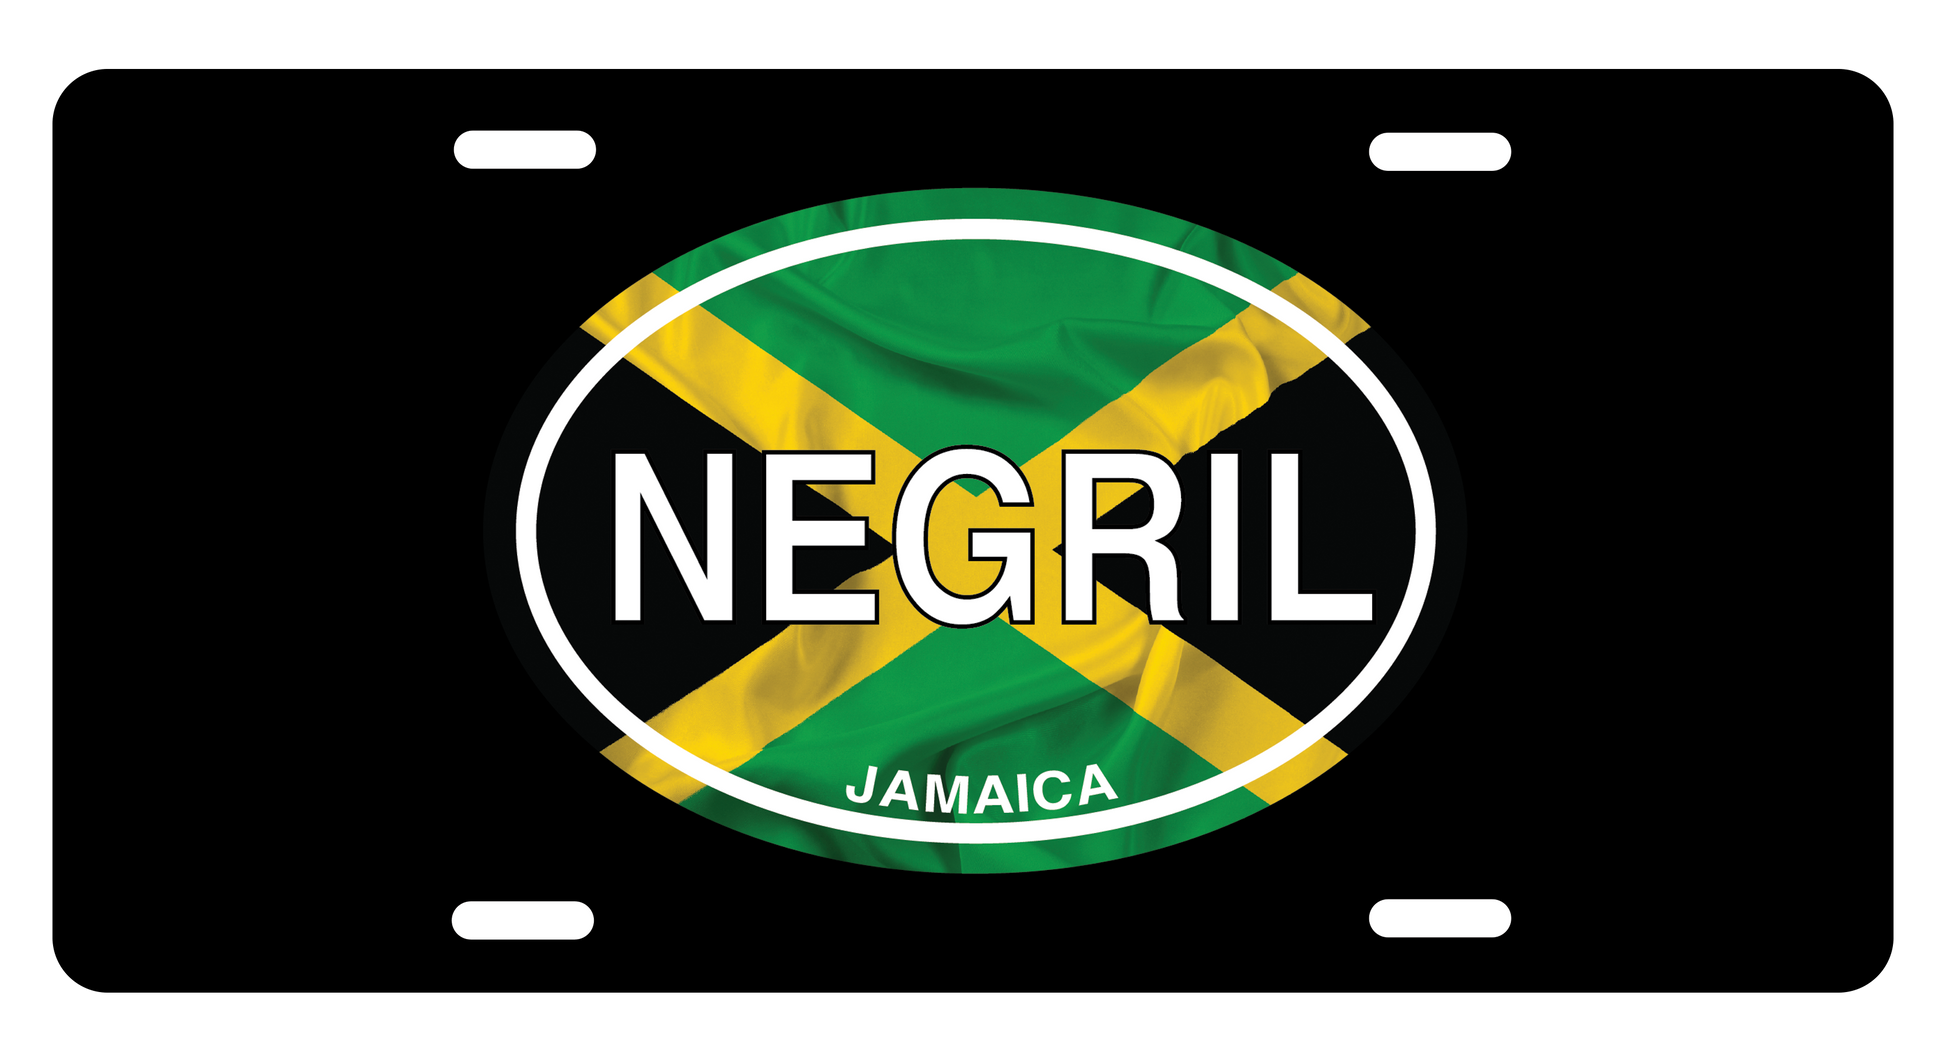 Negril Flag Logo License Plates - My Destination Location